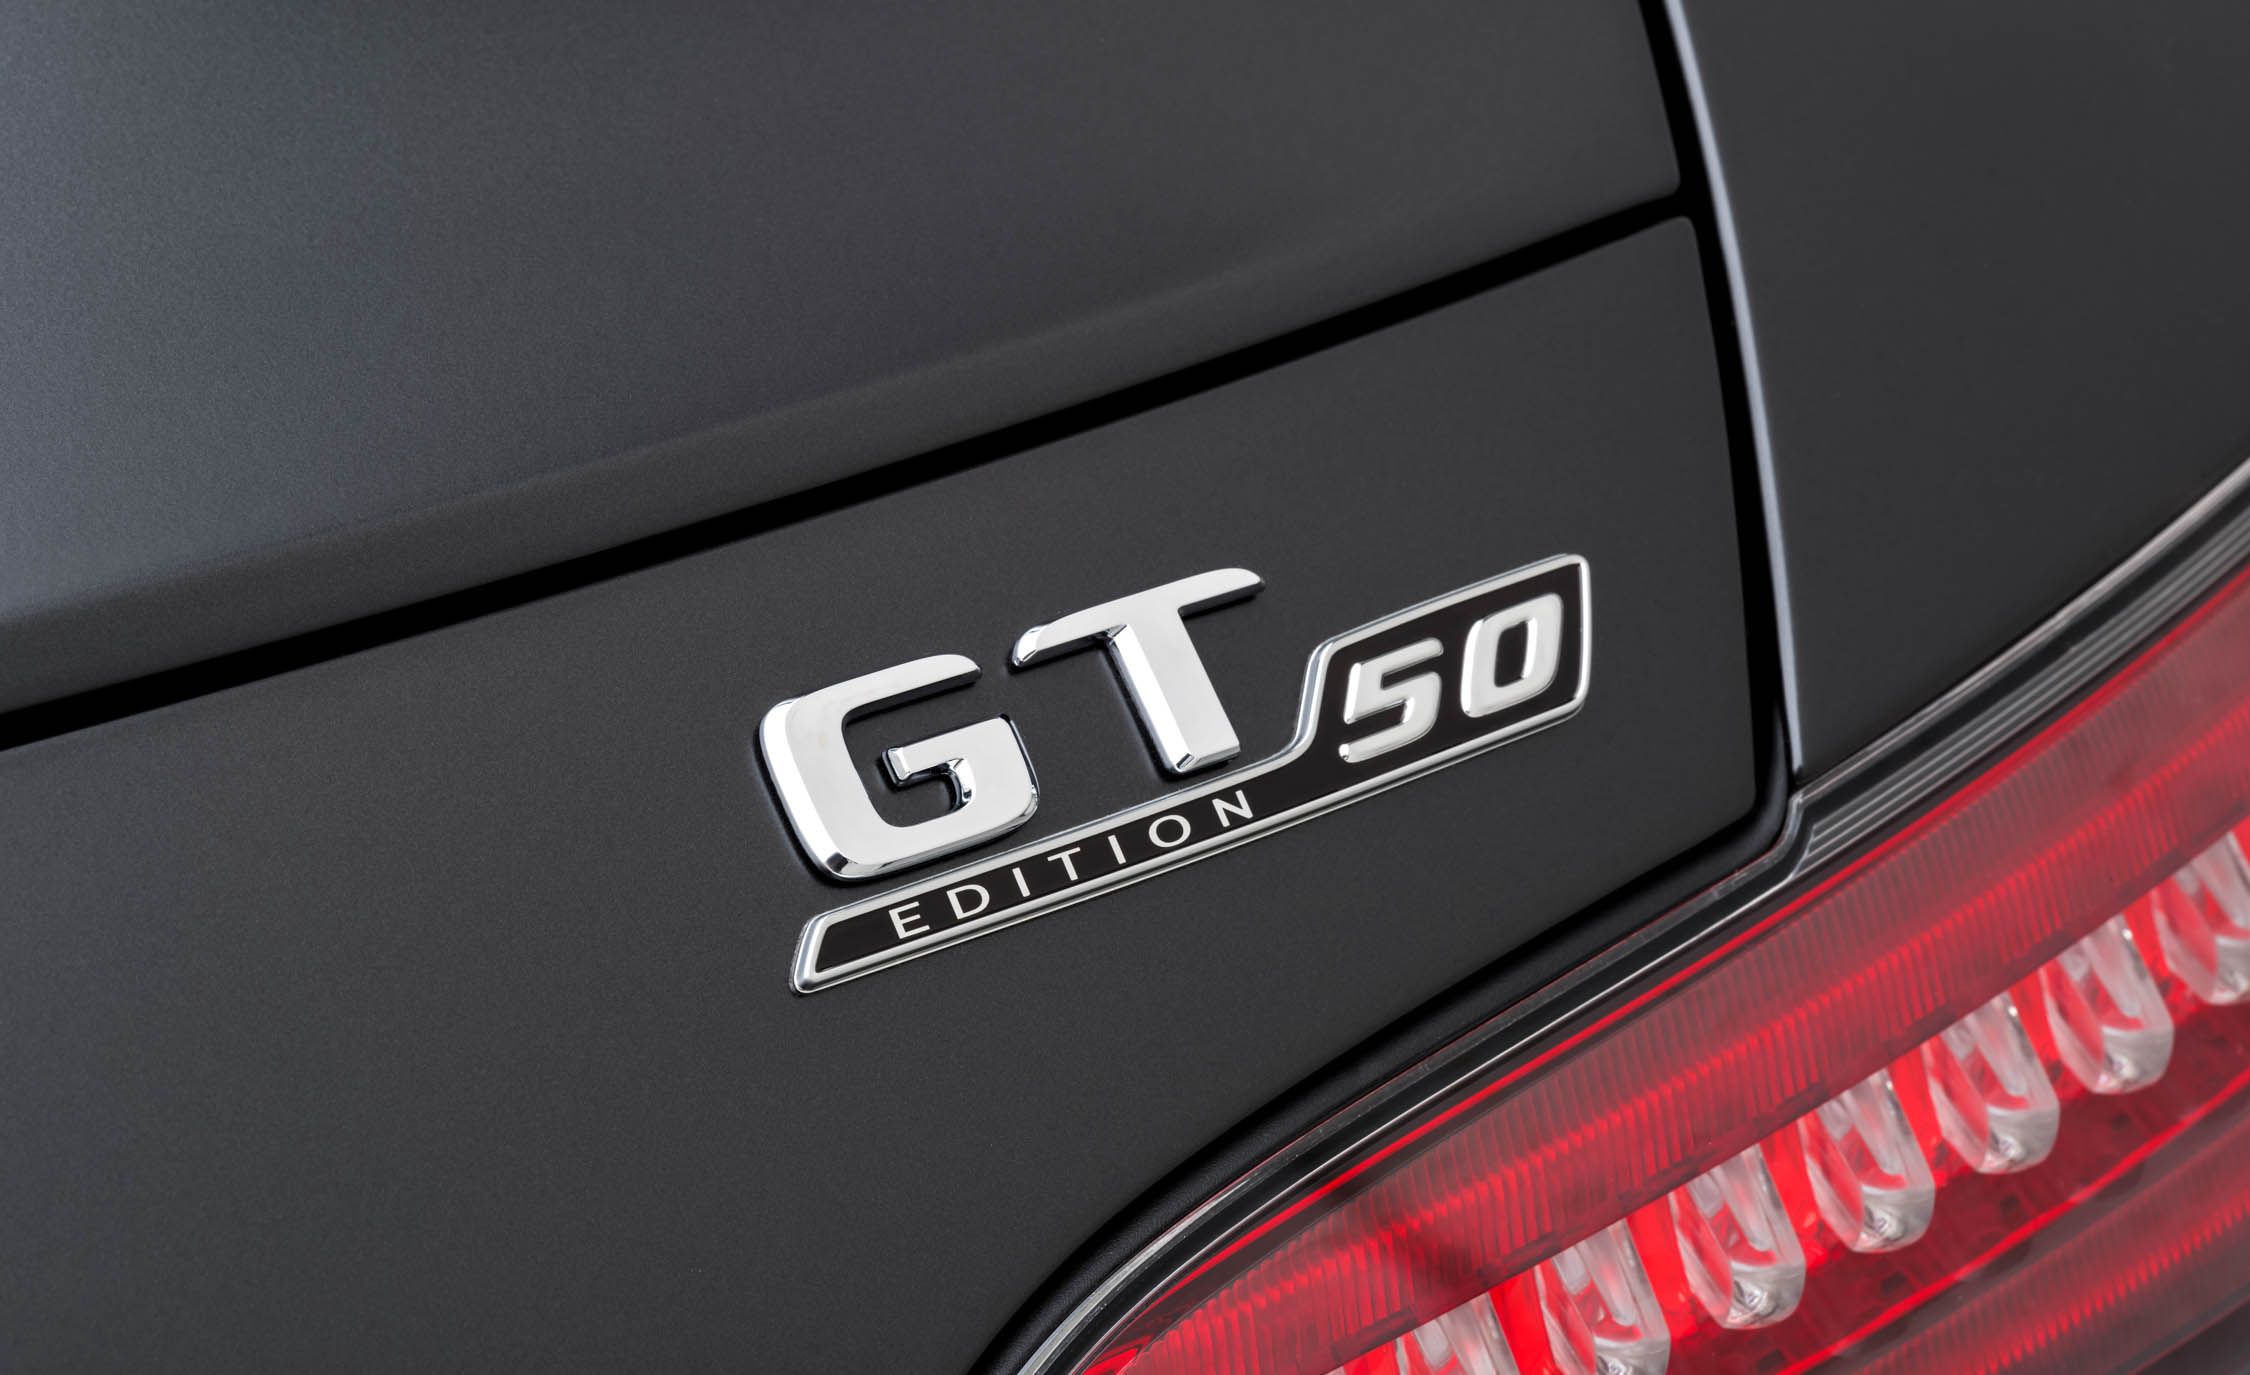 2018 Mercedes Amg Gt C Exterior View Badge Emblem (View 18 of 23)